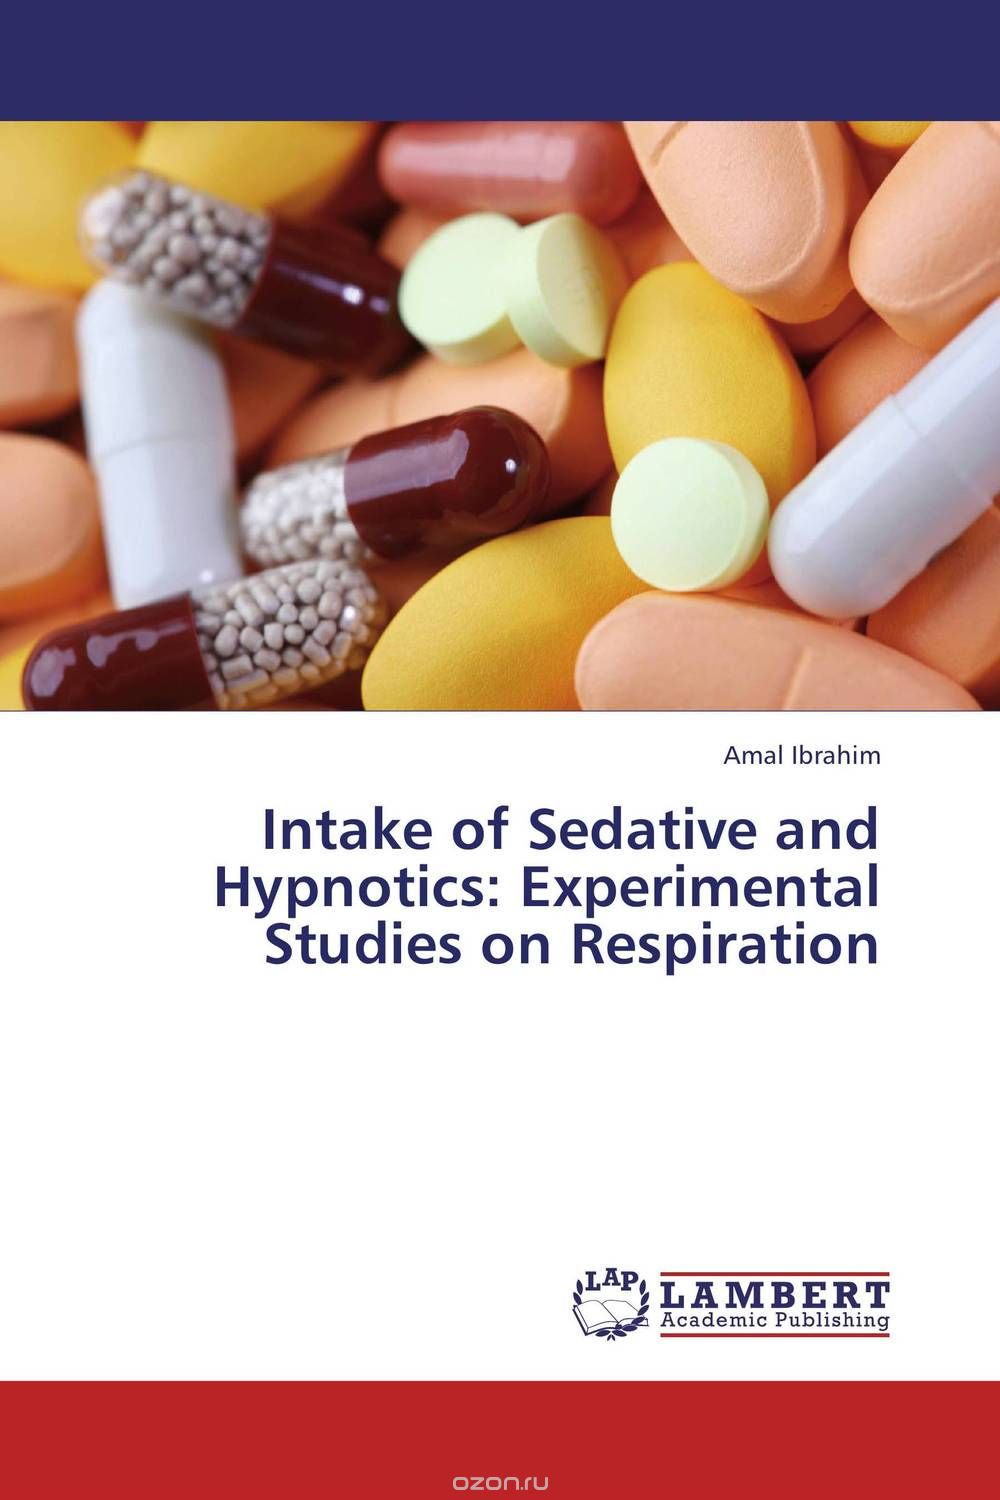 Скачать книгу "Intake of Sedative and Hypnotics: Experimental Studies on Respiration"